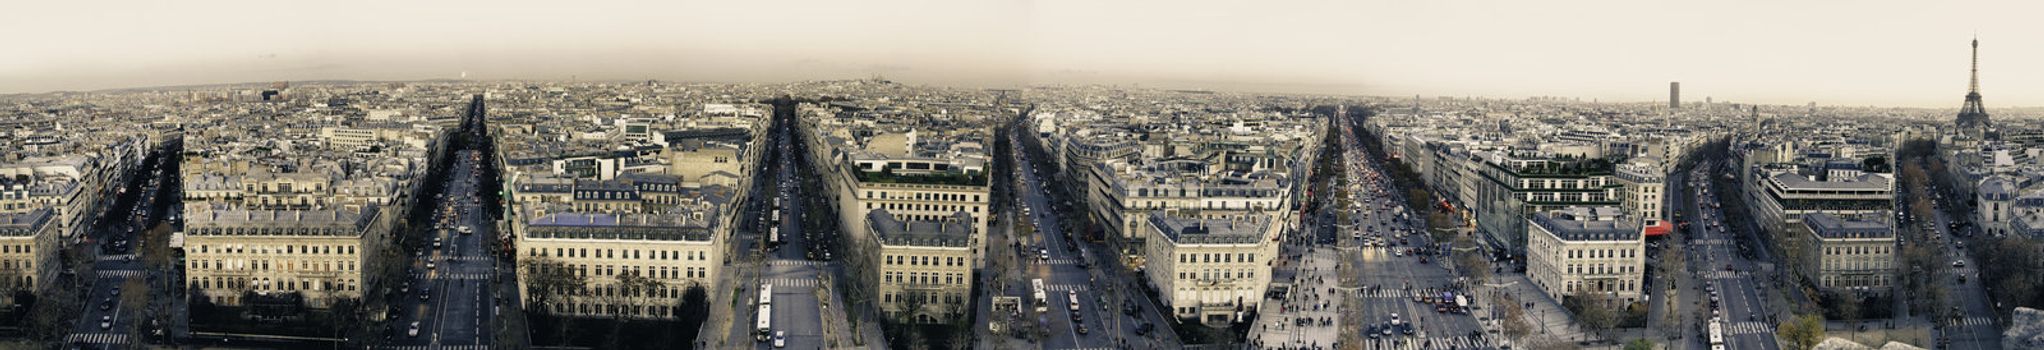 View of Paris from Arc de Triomphe, France